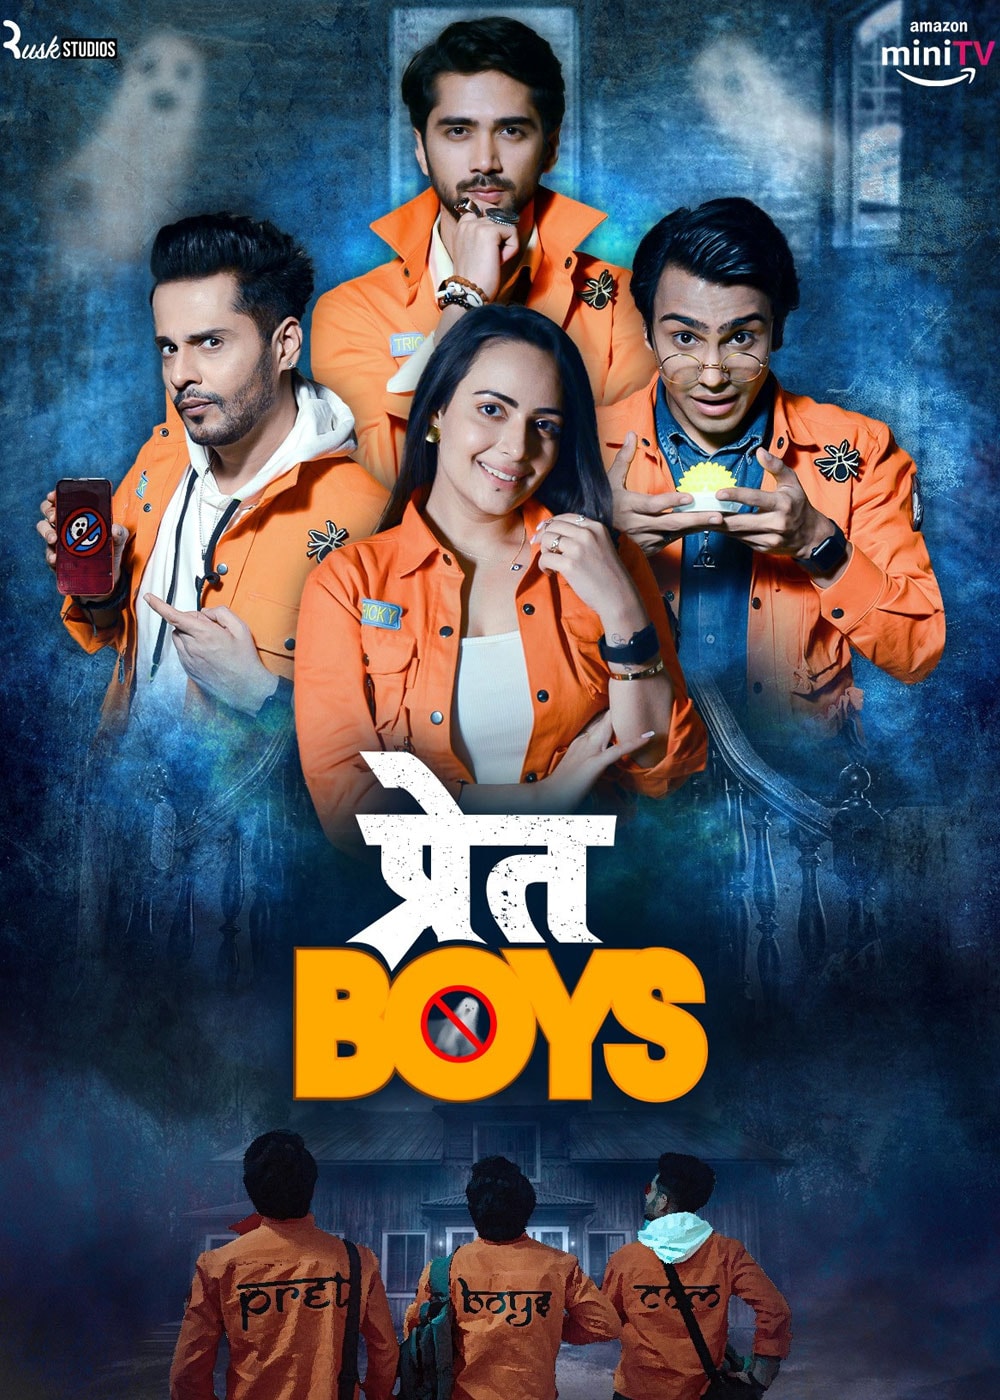 Pret Boys (2023) 720p-480p HEVC HDRip Hindi S01 Complete Web Series x265 AAC ESubs